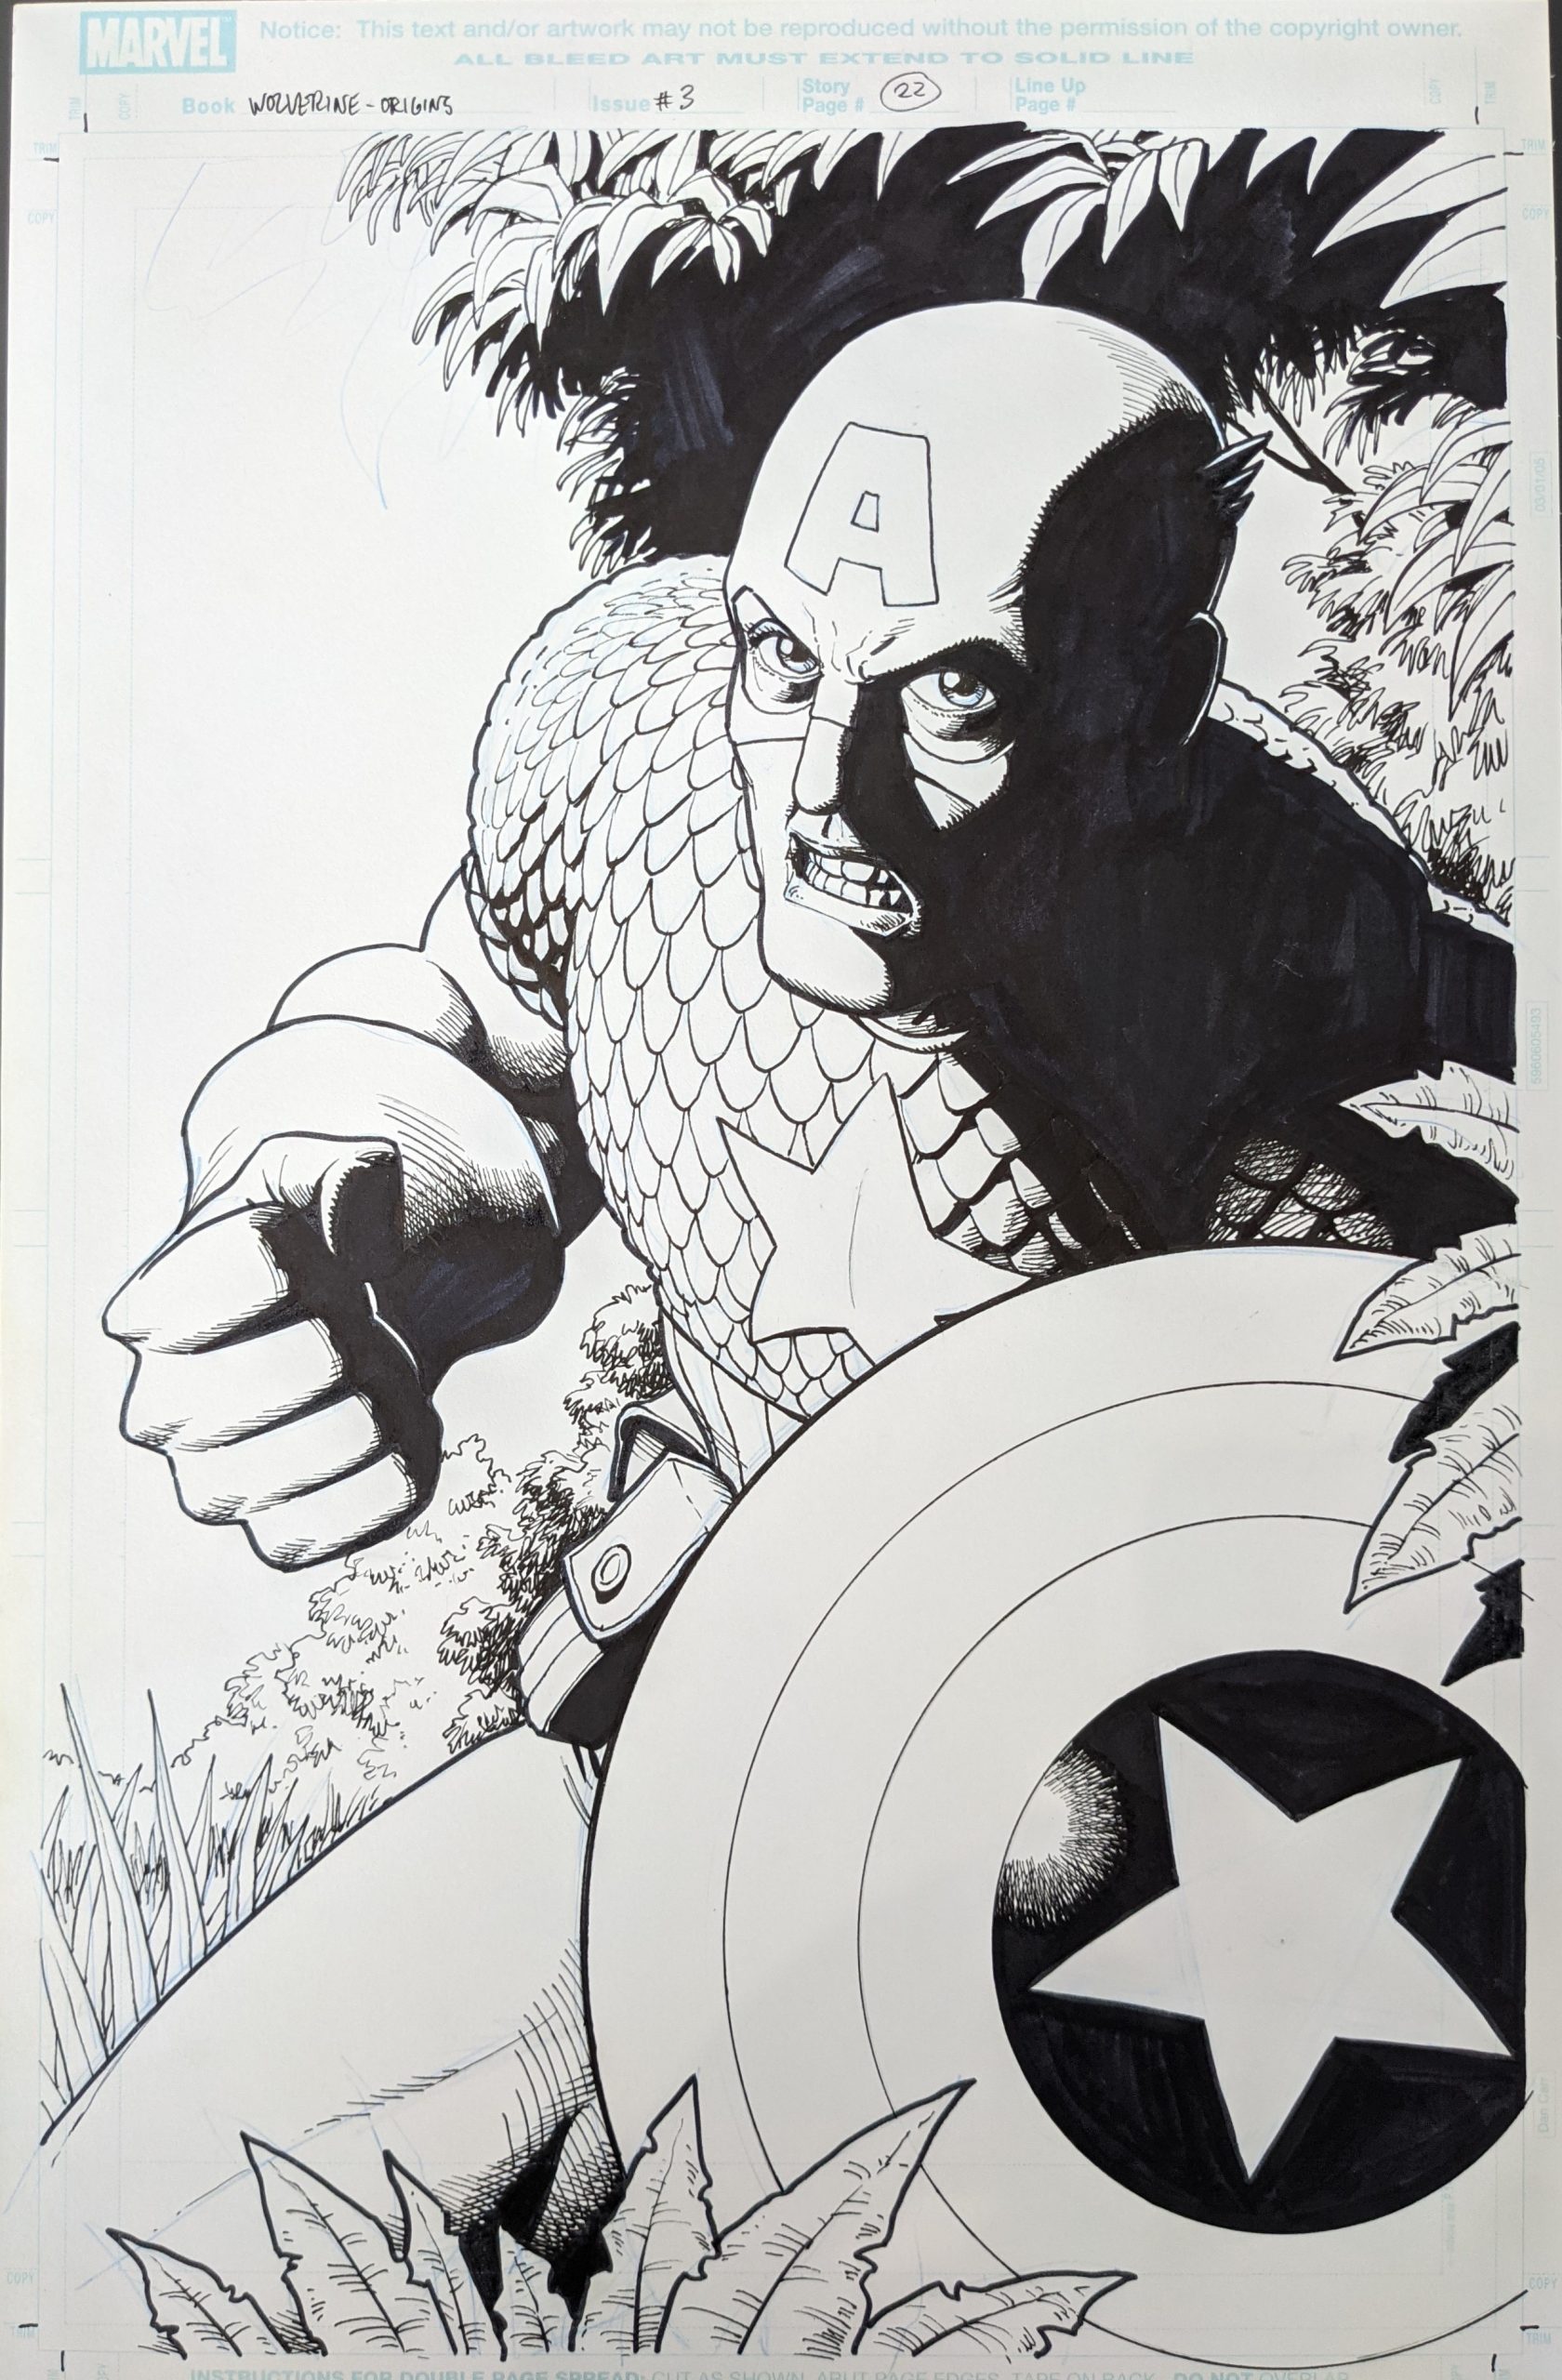 Captain America by Steve Dillon